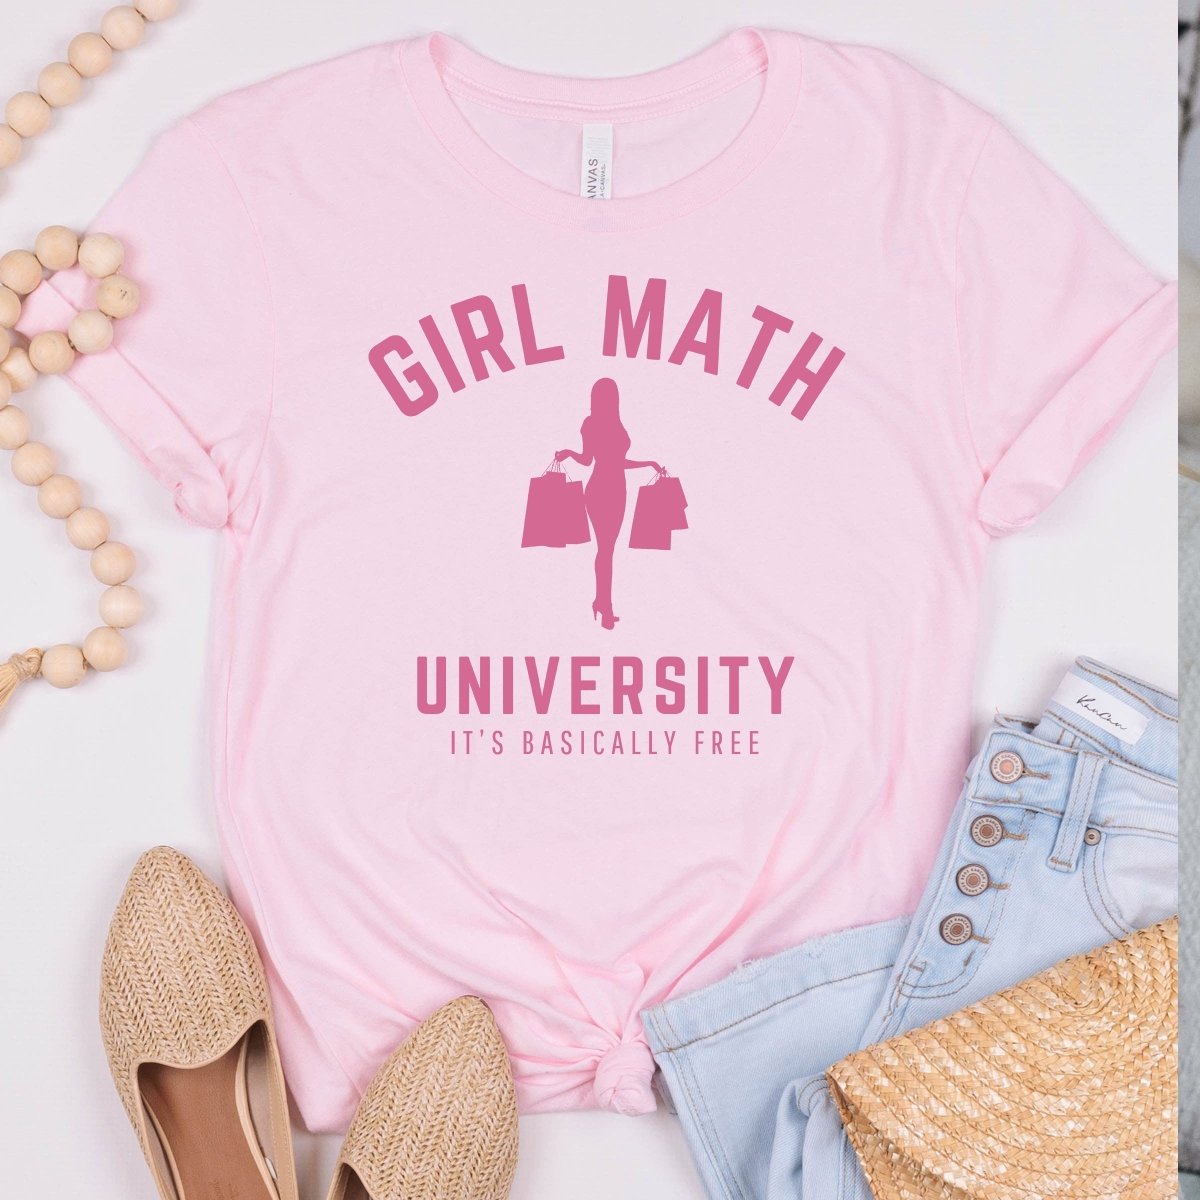 Girl Math University tee - Limeberry Designs